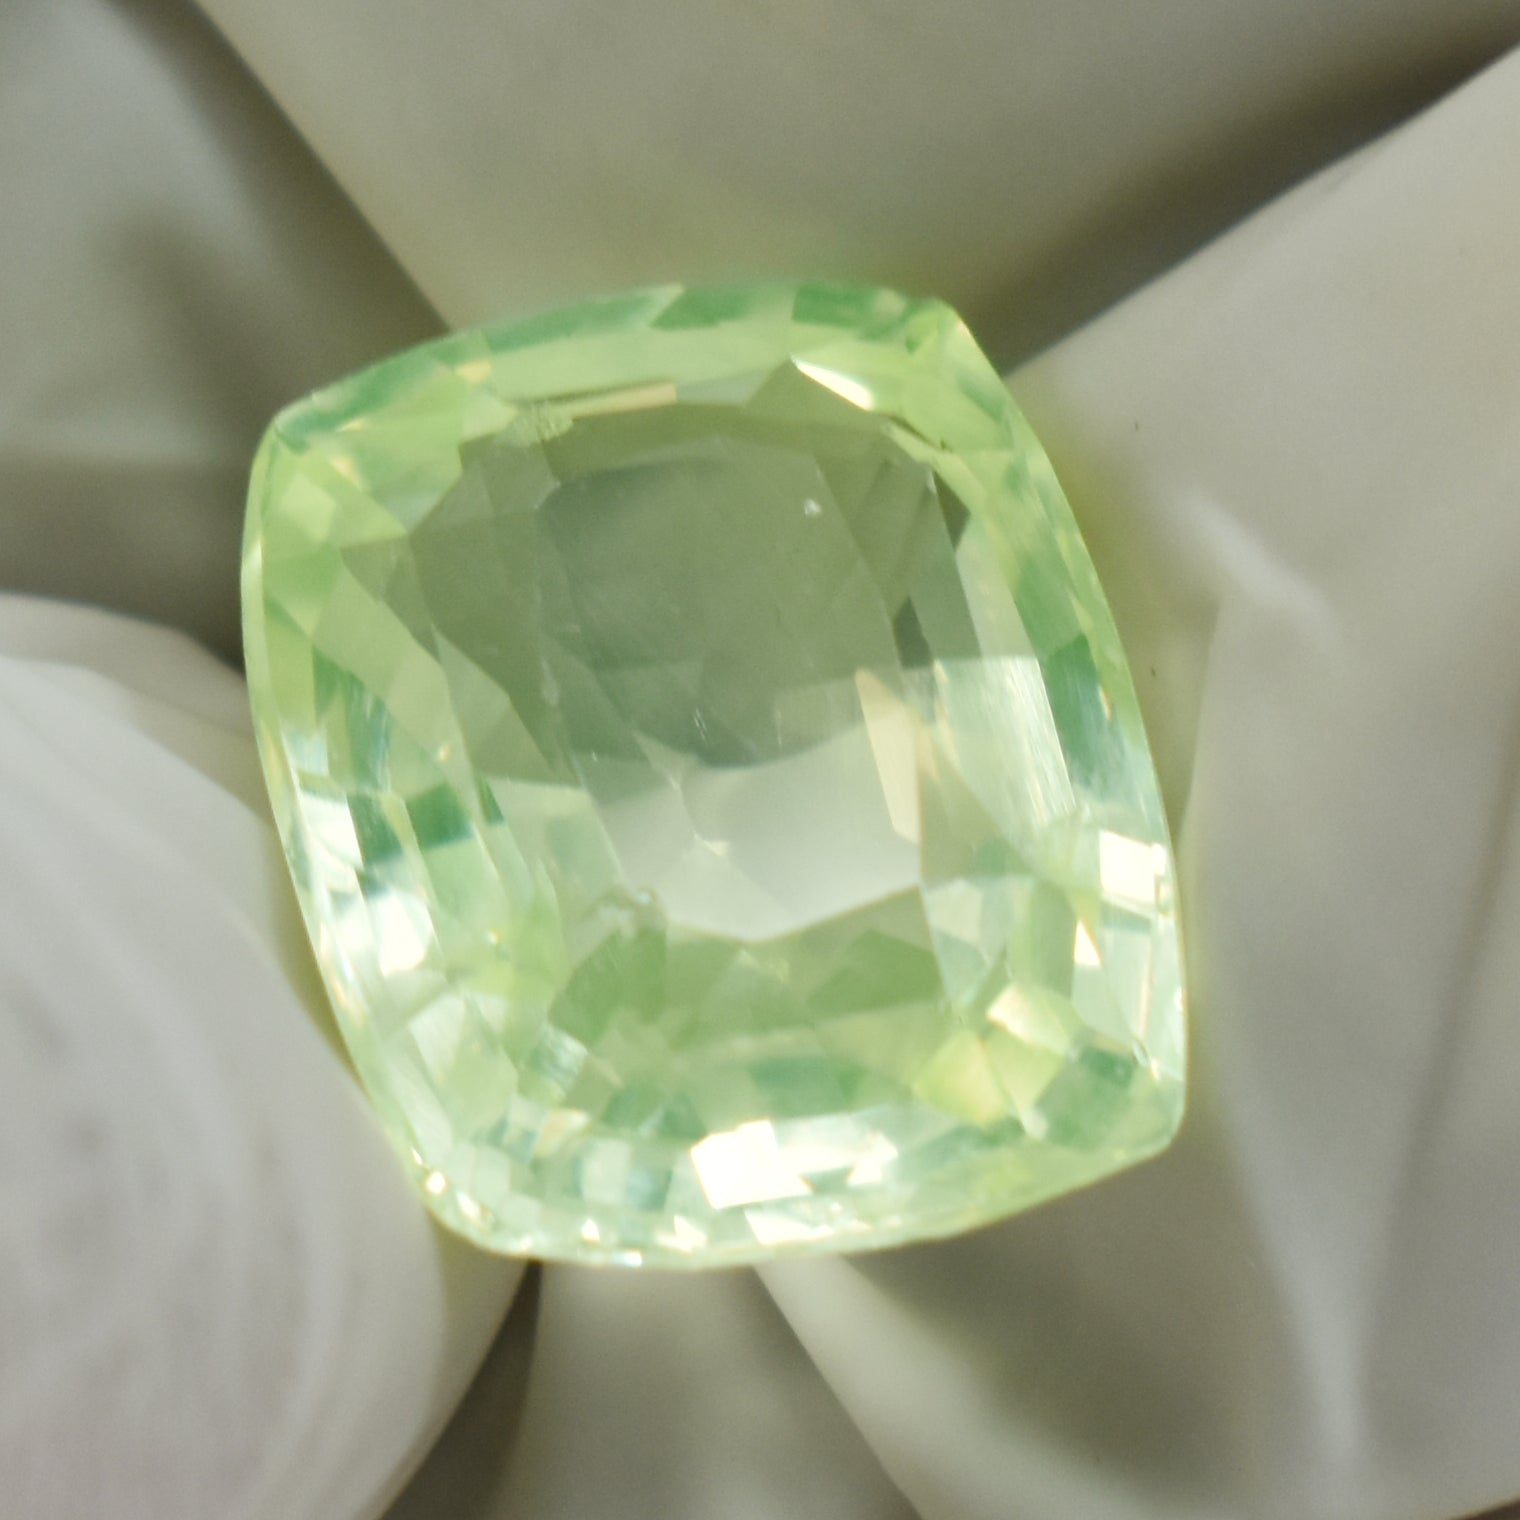 Stunning  Green Sapphire From Sri-Lanka 7.20 Carat Natural Cushion Cut Certified Bluish Green Sapphire Loose Gemstone